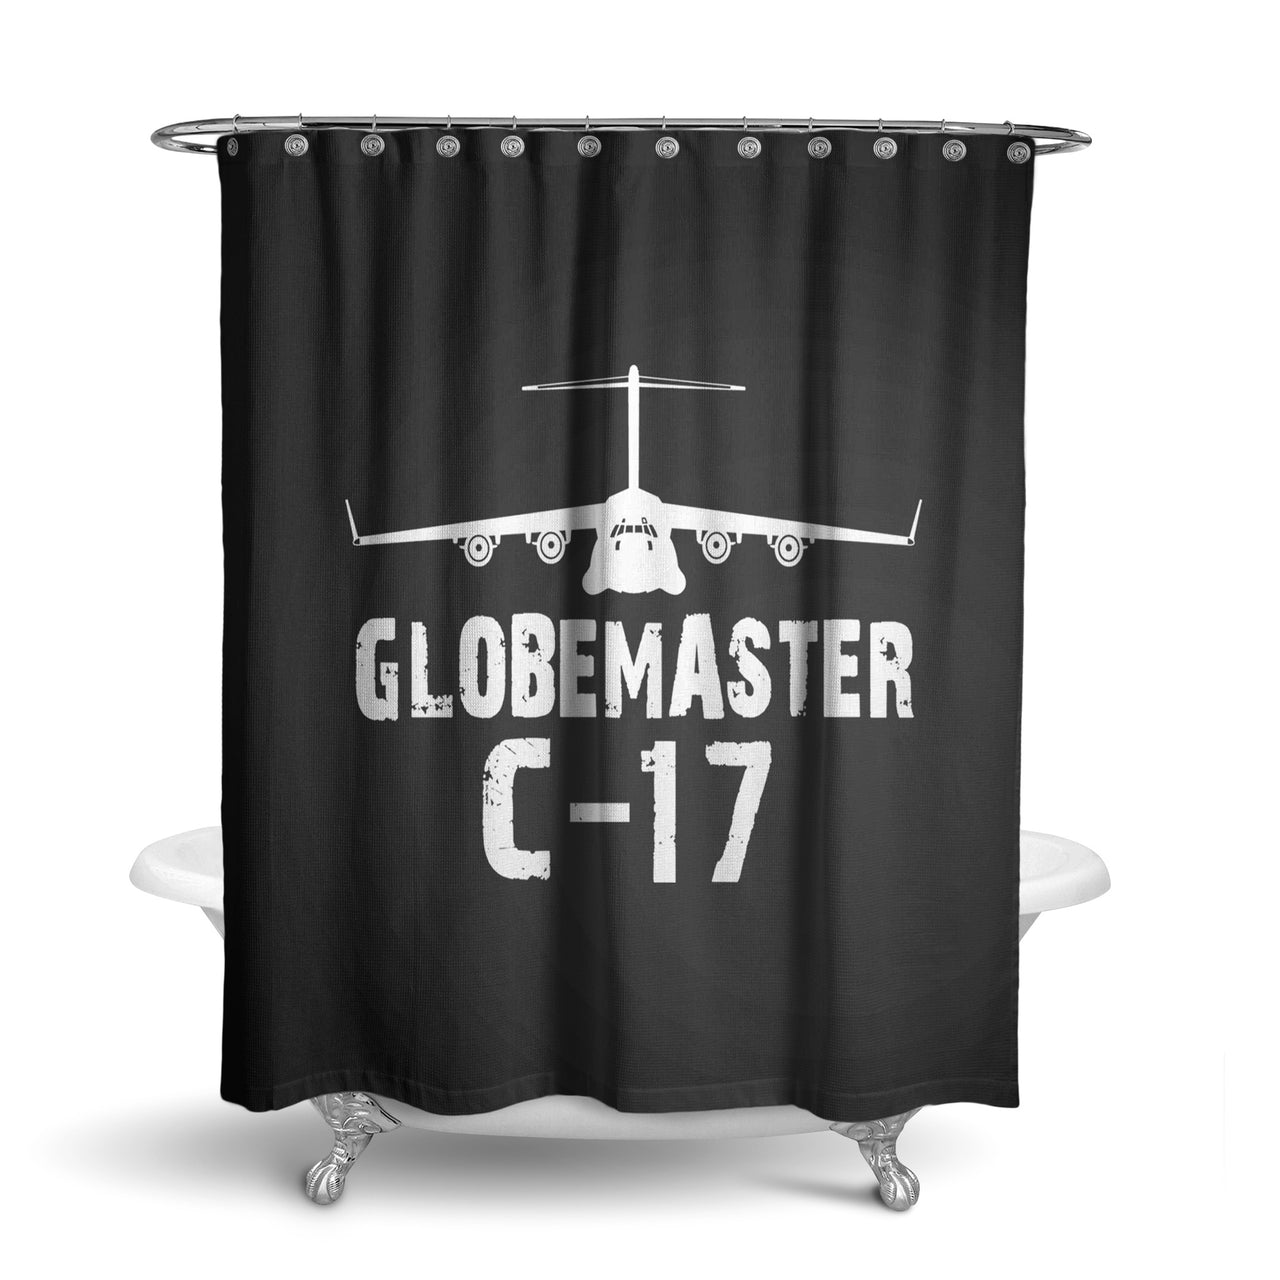 GlobeMaster C-17 & Plane Designed Shower Curtains